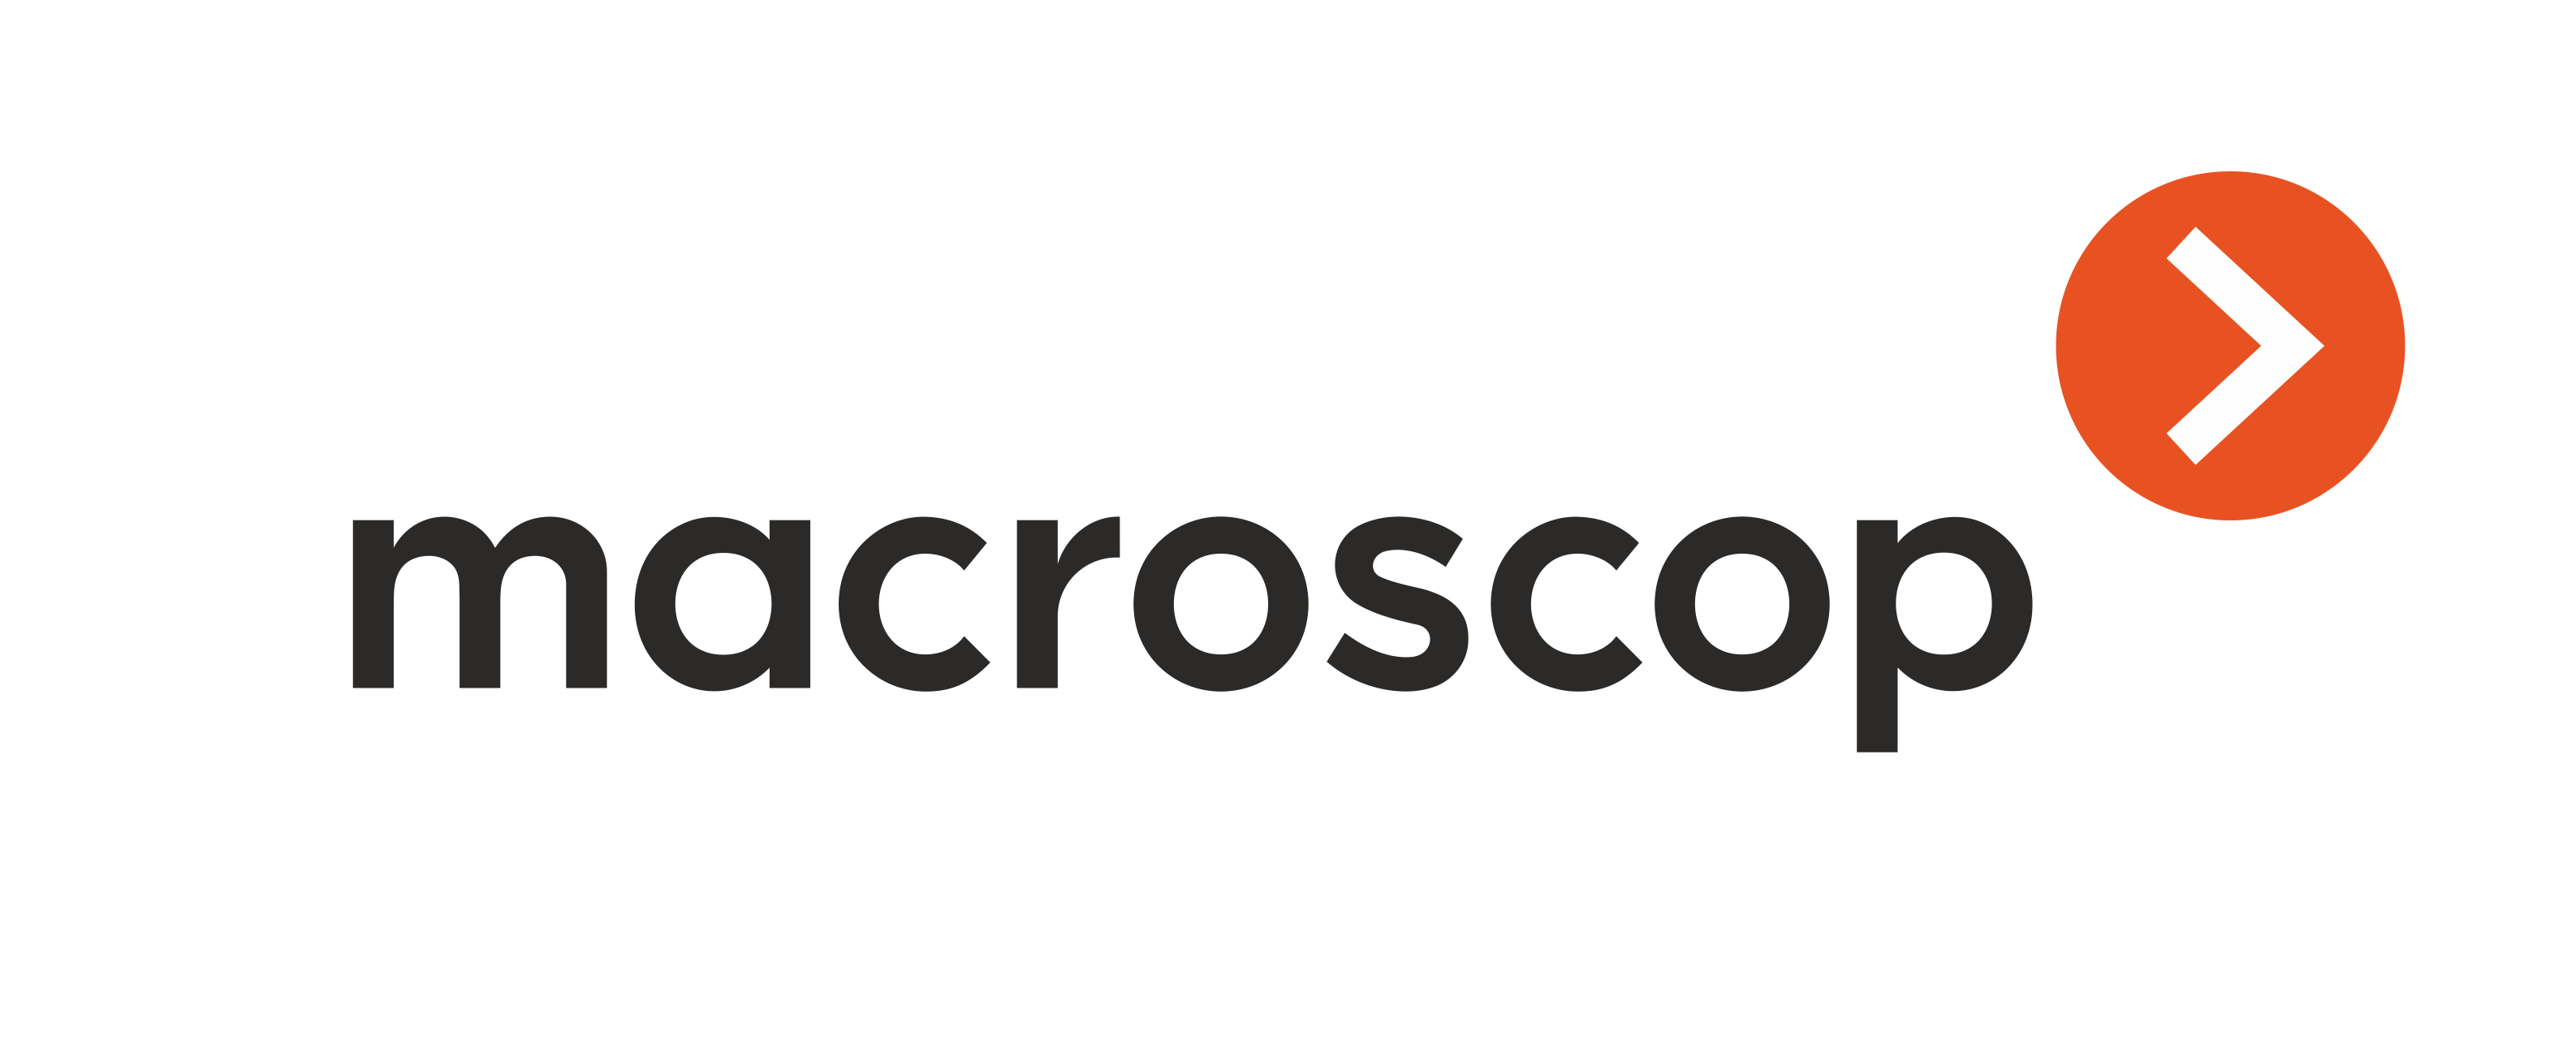 Macroscop logo